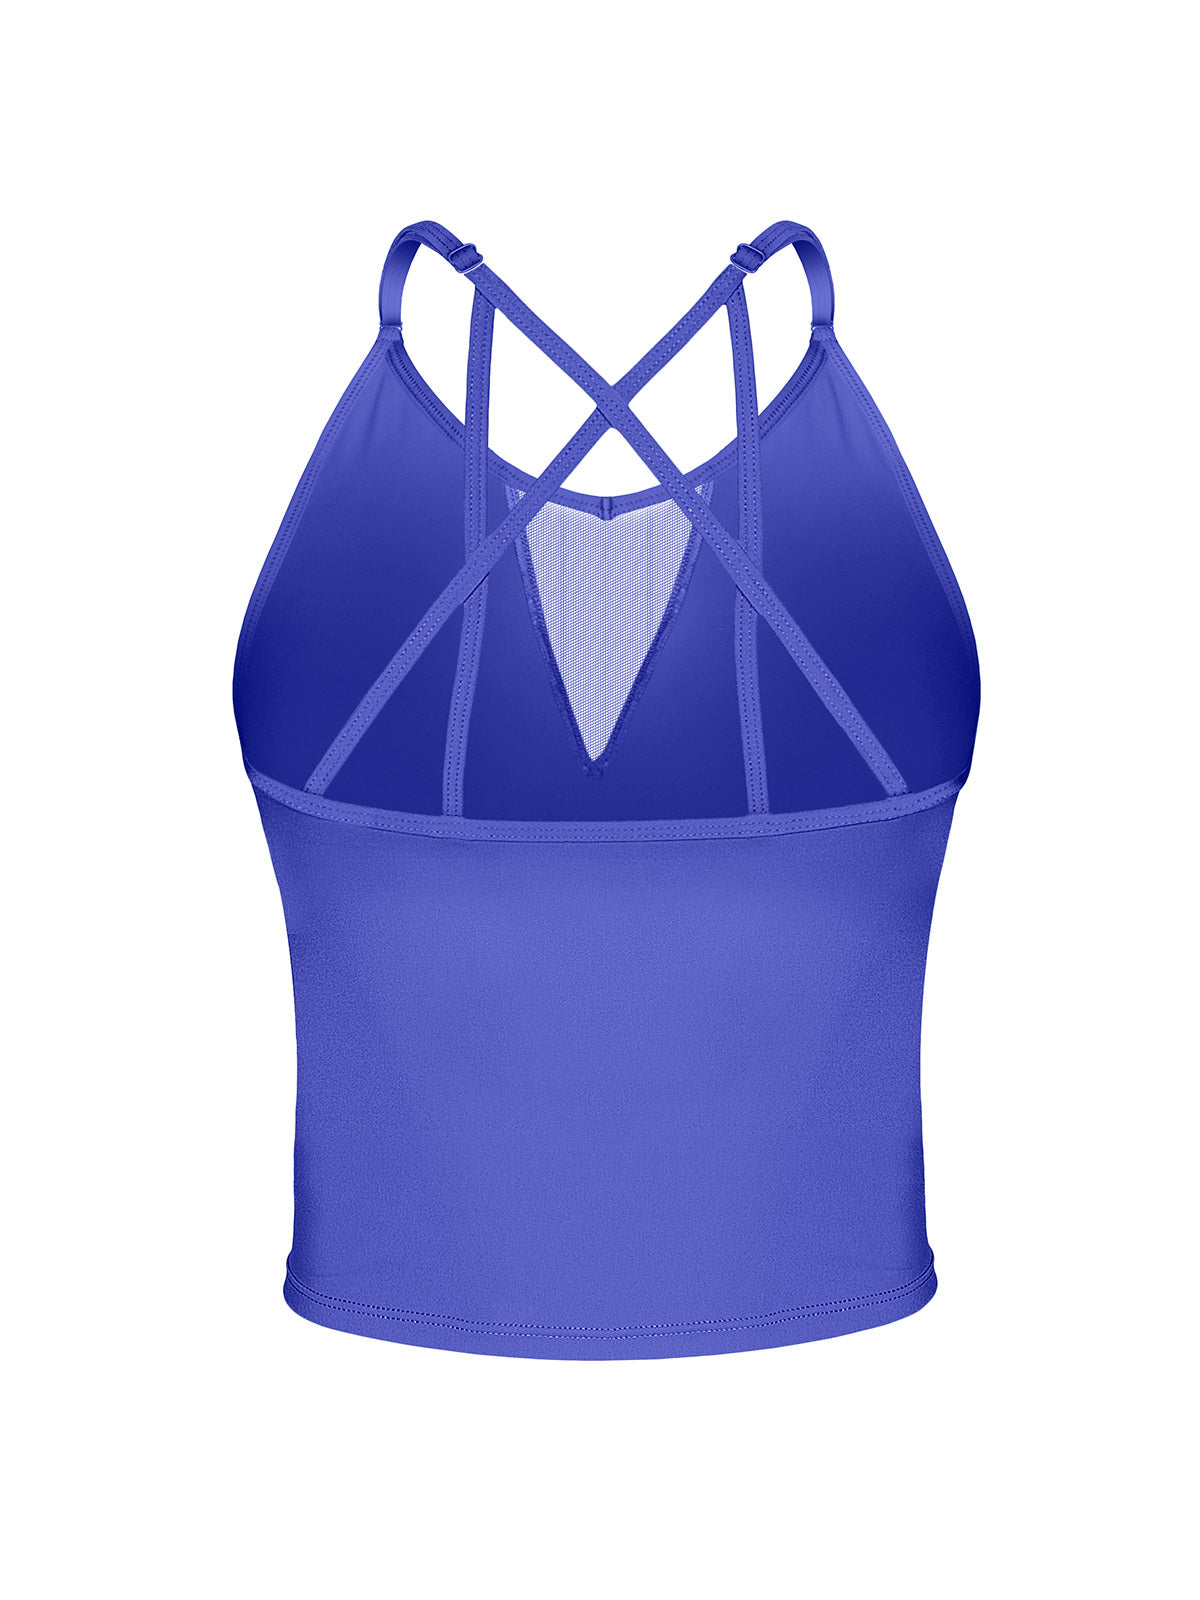 SheFit Flex Sports Bra Blue (Royal Blue and Purple) with Laundry